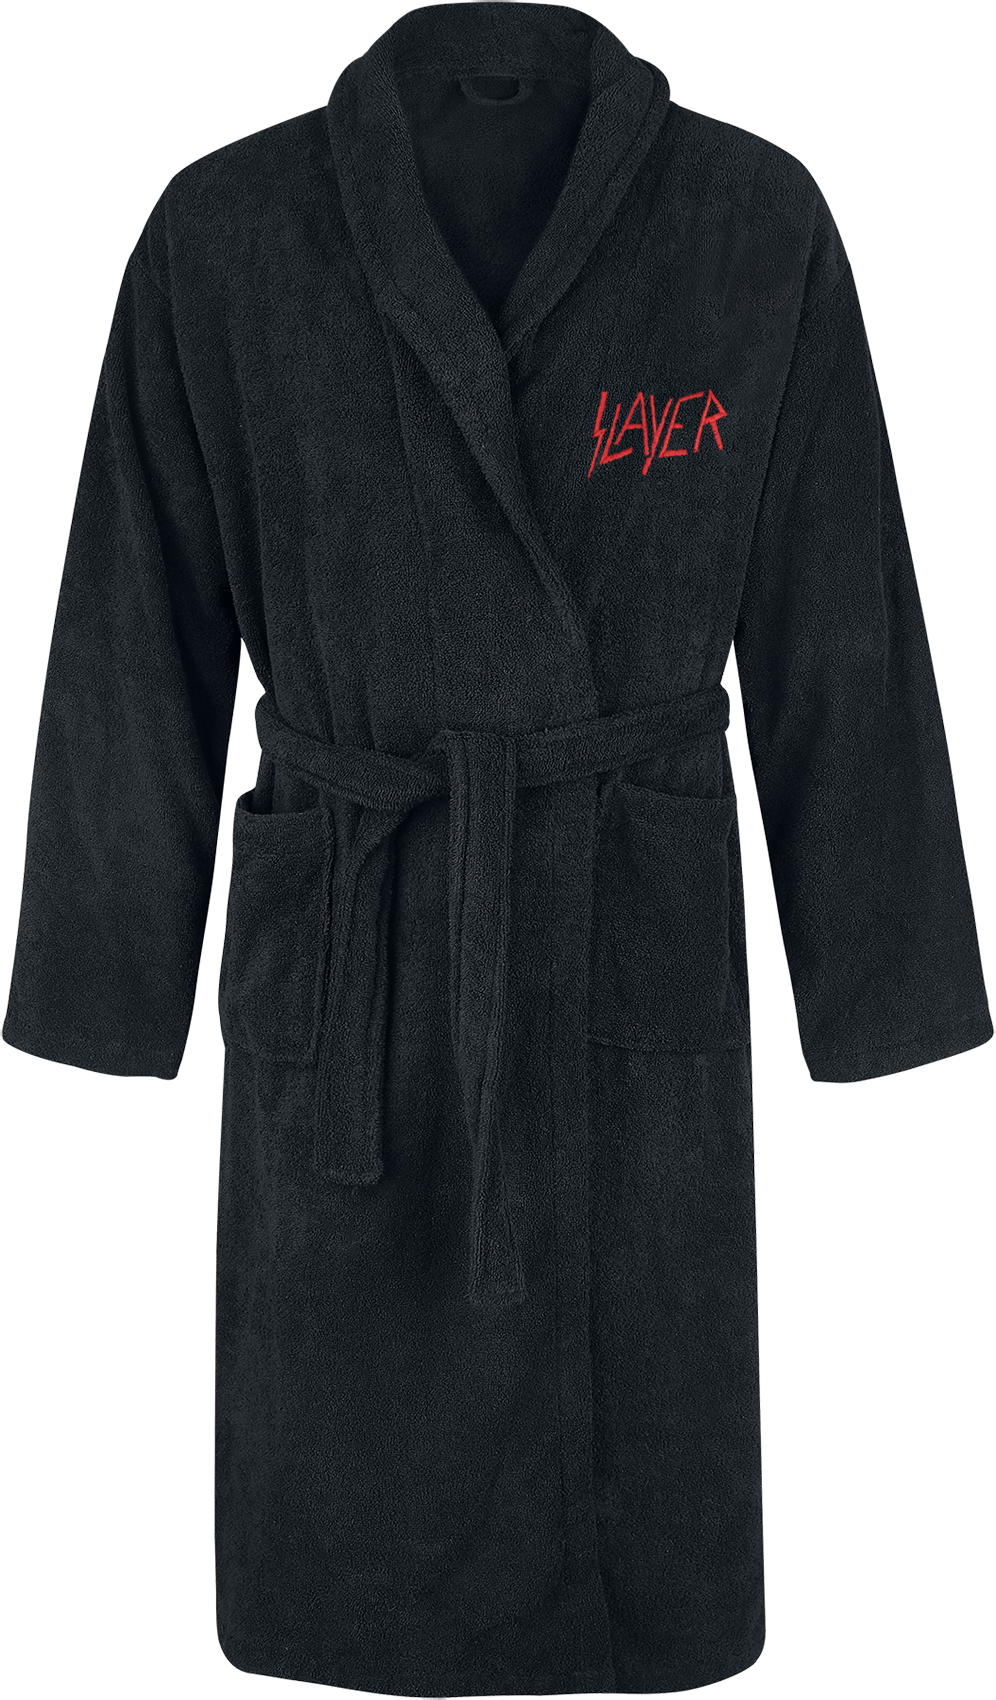 Slayer - Logo - Bademantel - schwarz - EMP Exklusiv!